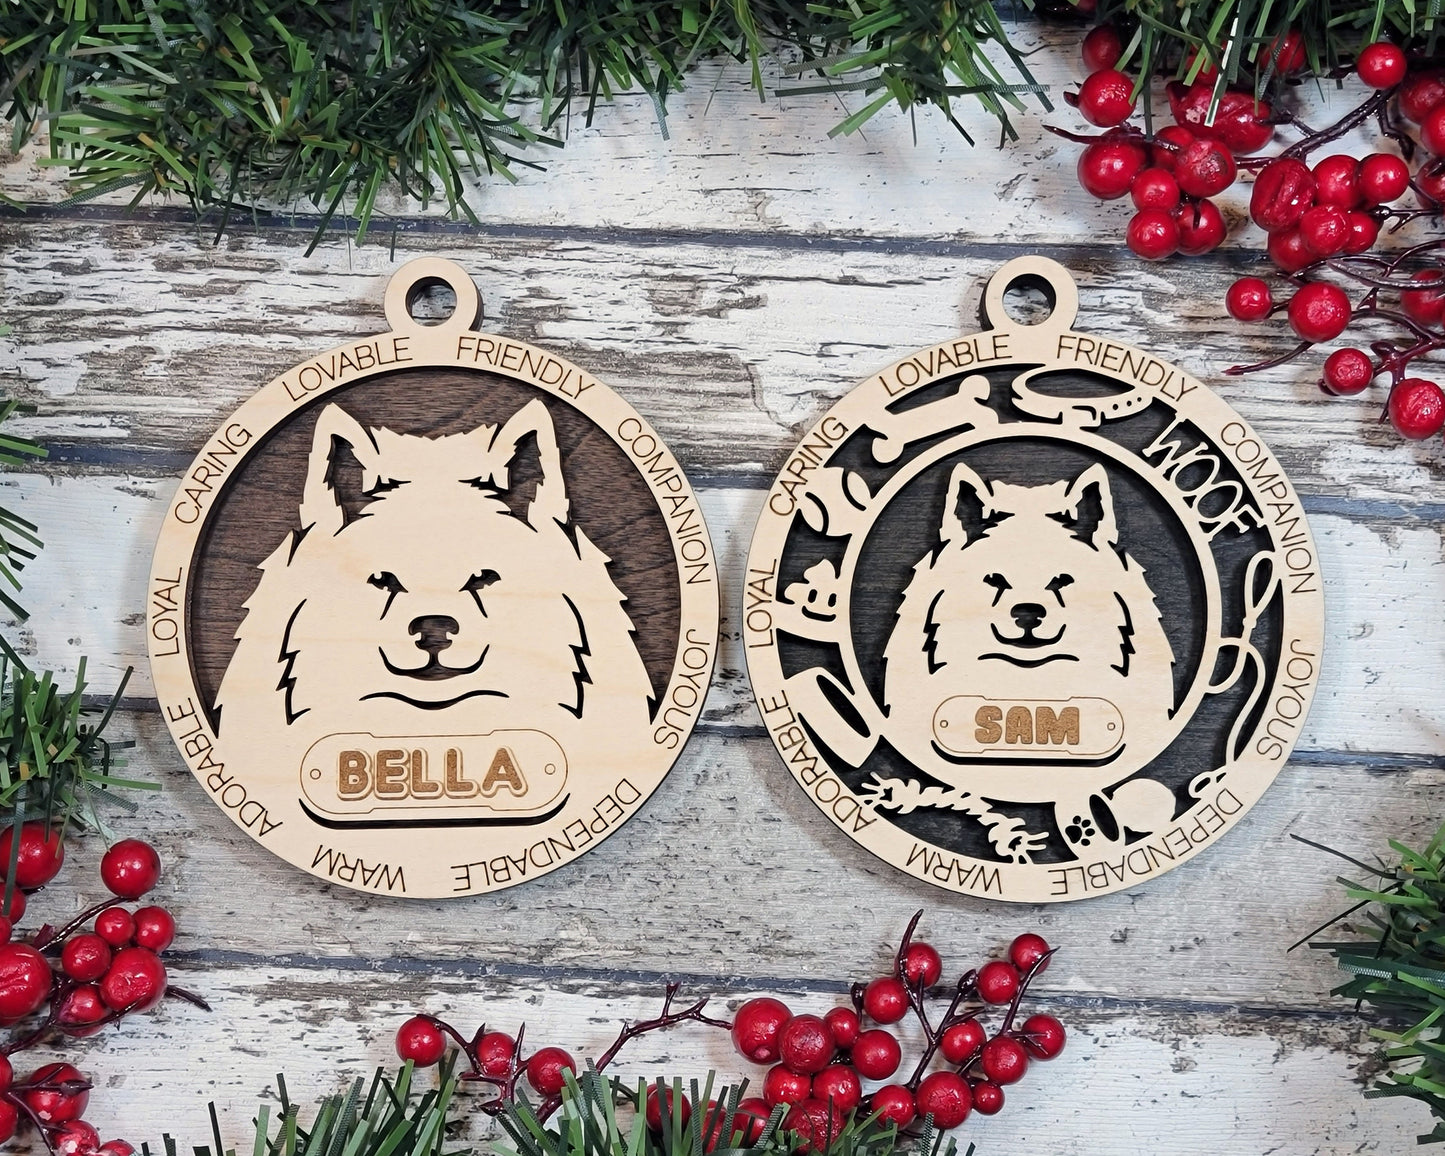 American Eskimo - Adorable Dog Ornaments - 2 Ornaments included - SVG, PDF, AI File Download - Sized for Glowforge